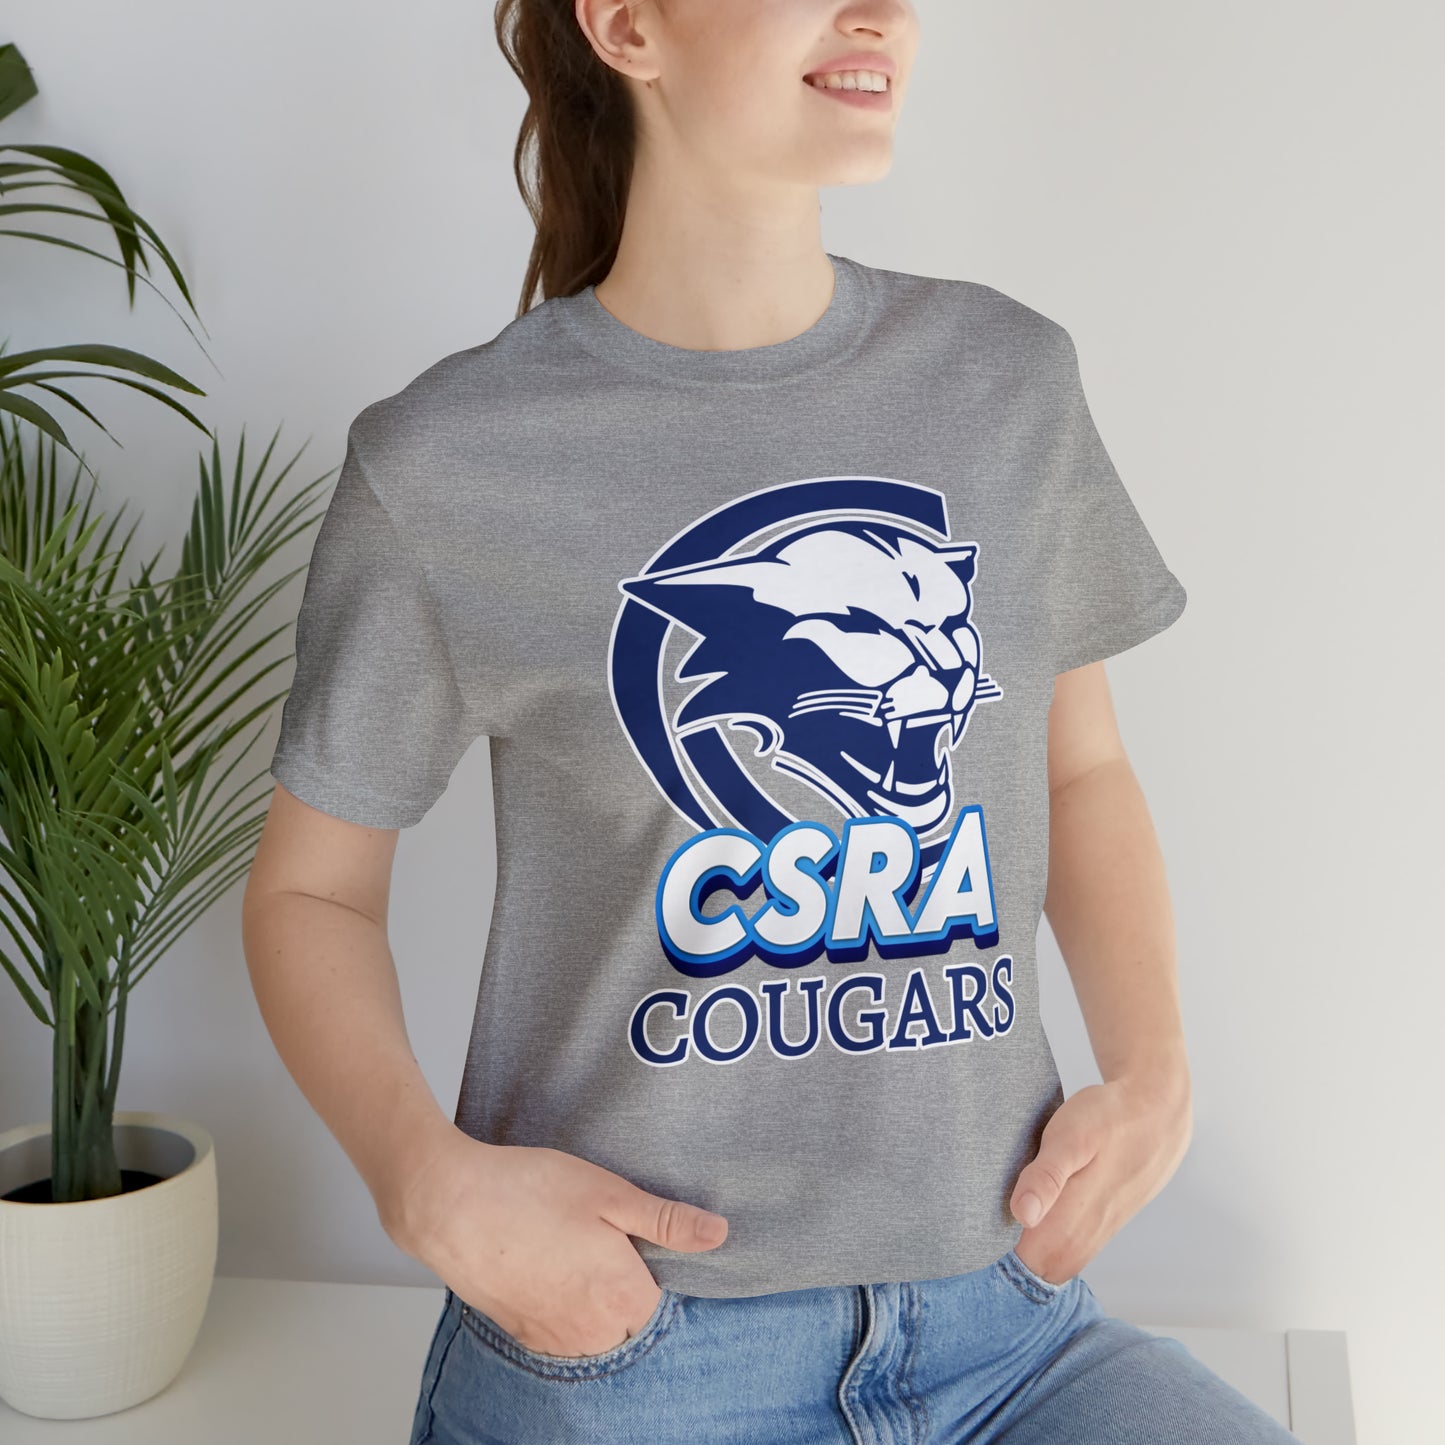 CSRA Cougars Unisex Jersey Tee